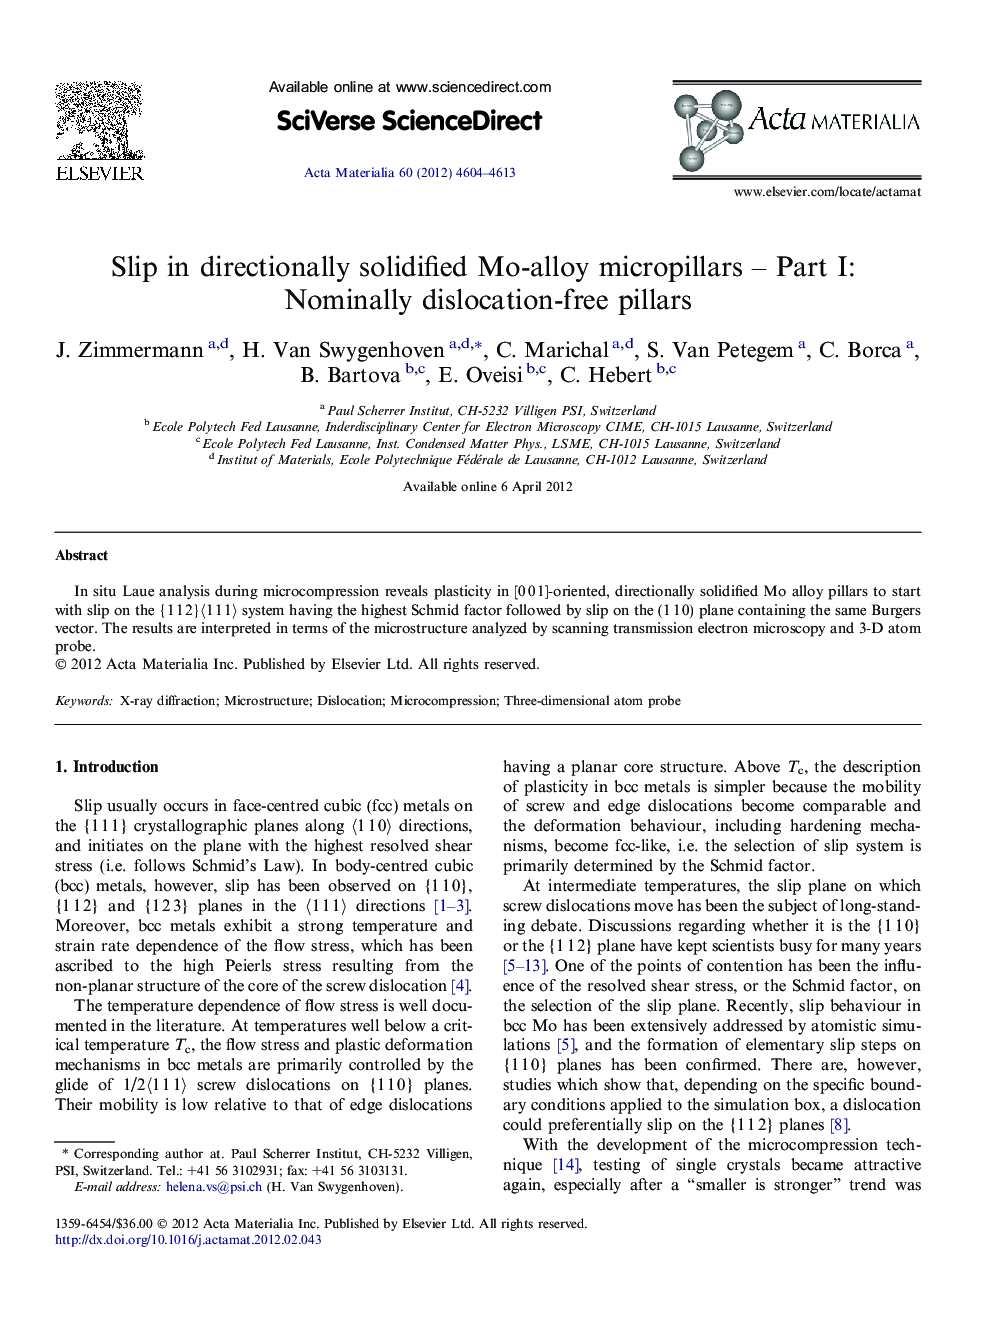 Slip in directionally solidified Mo-alloy micropillars – Part I: Nominally dislocation-free pillars